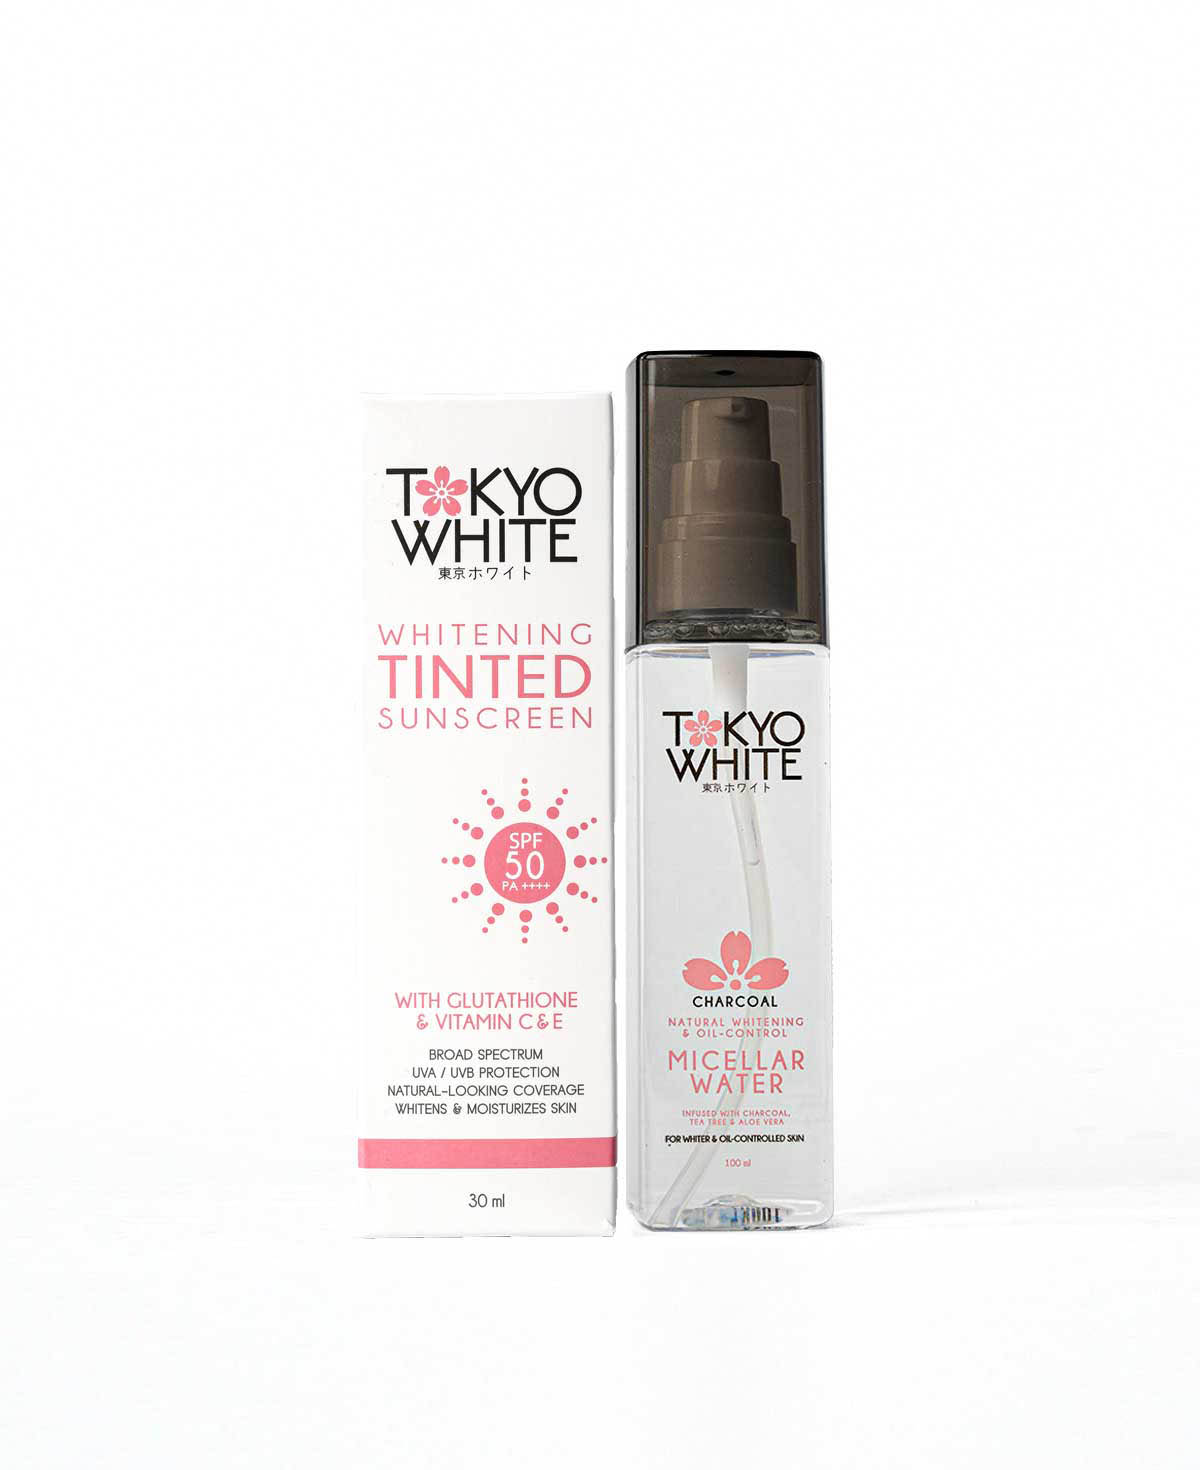 Tokyo White Whitening Tinted Sunscreen with Glutathione and Tokyo White Sakura Natural Whitening & Anti-Aging Micellar Water